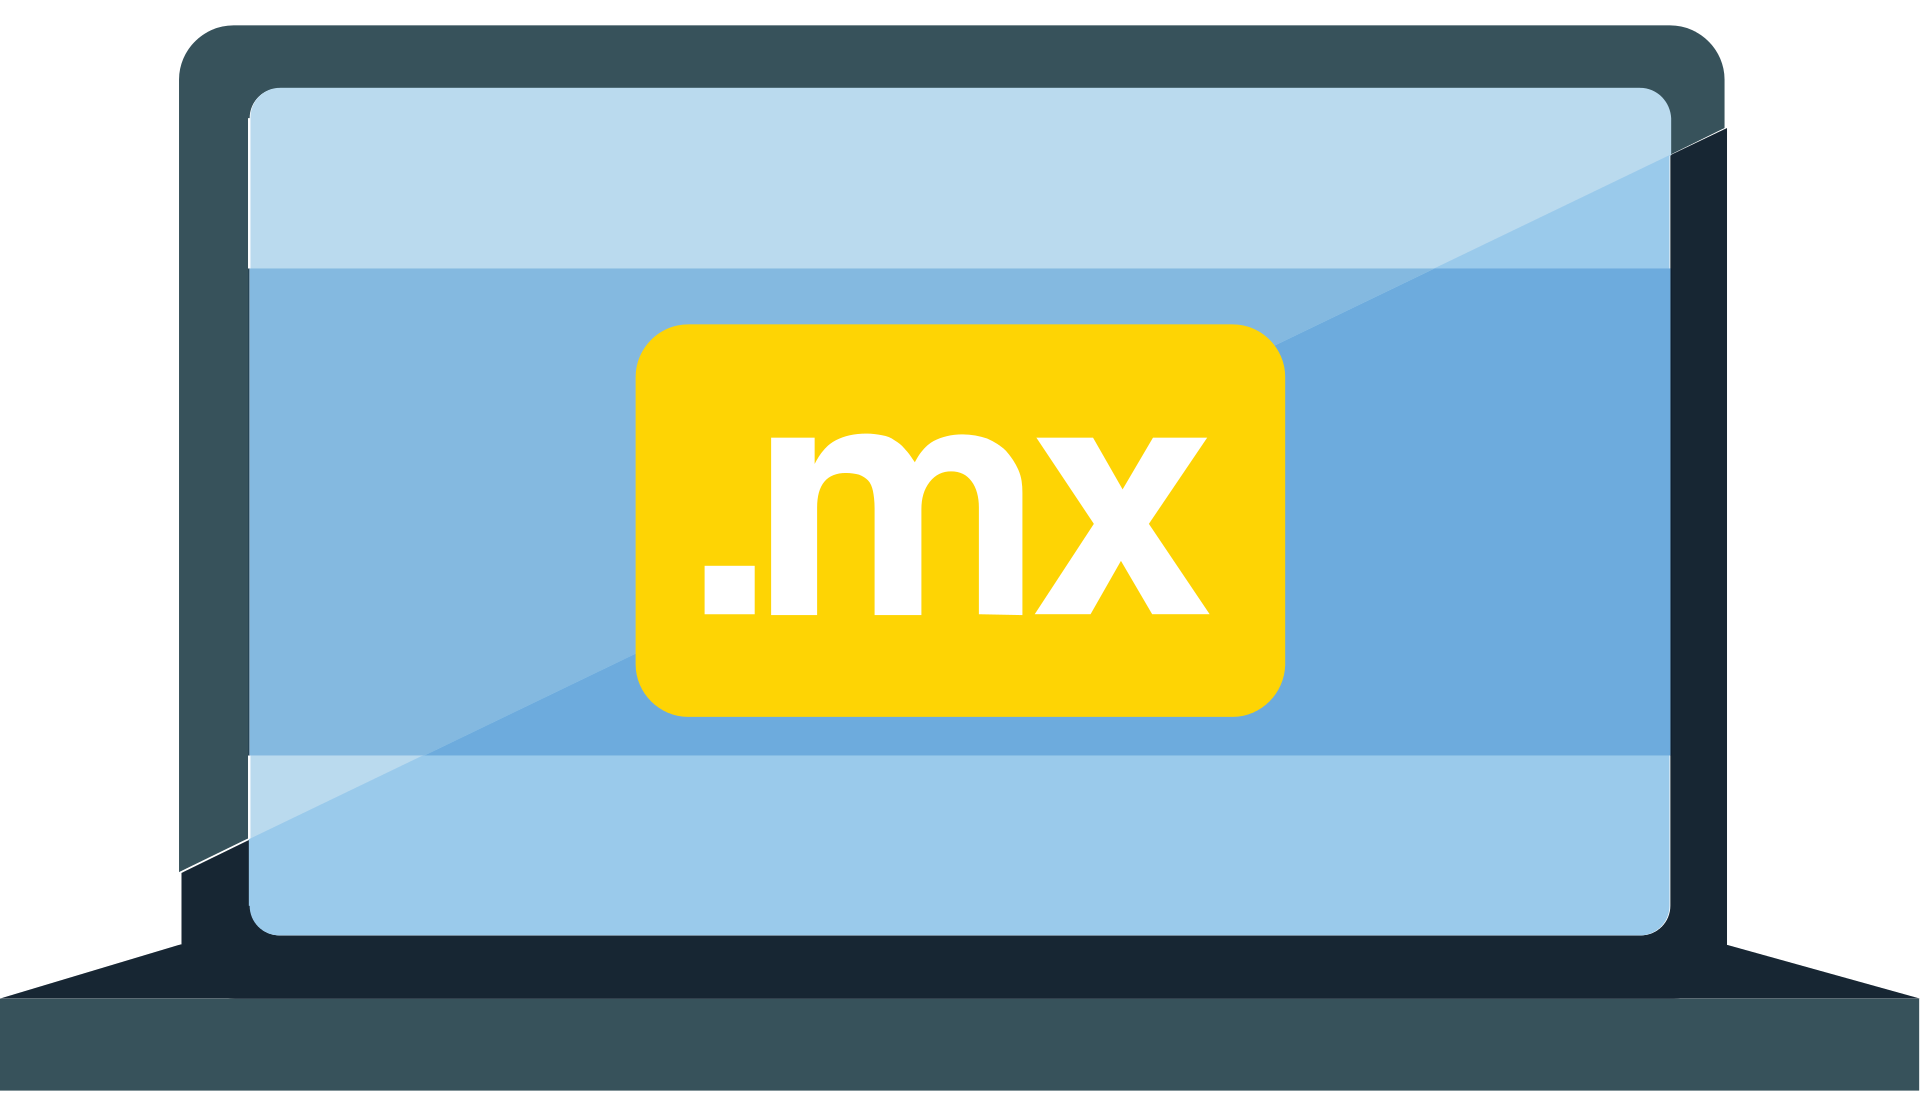 apaxco.mx  logo